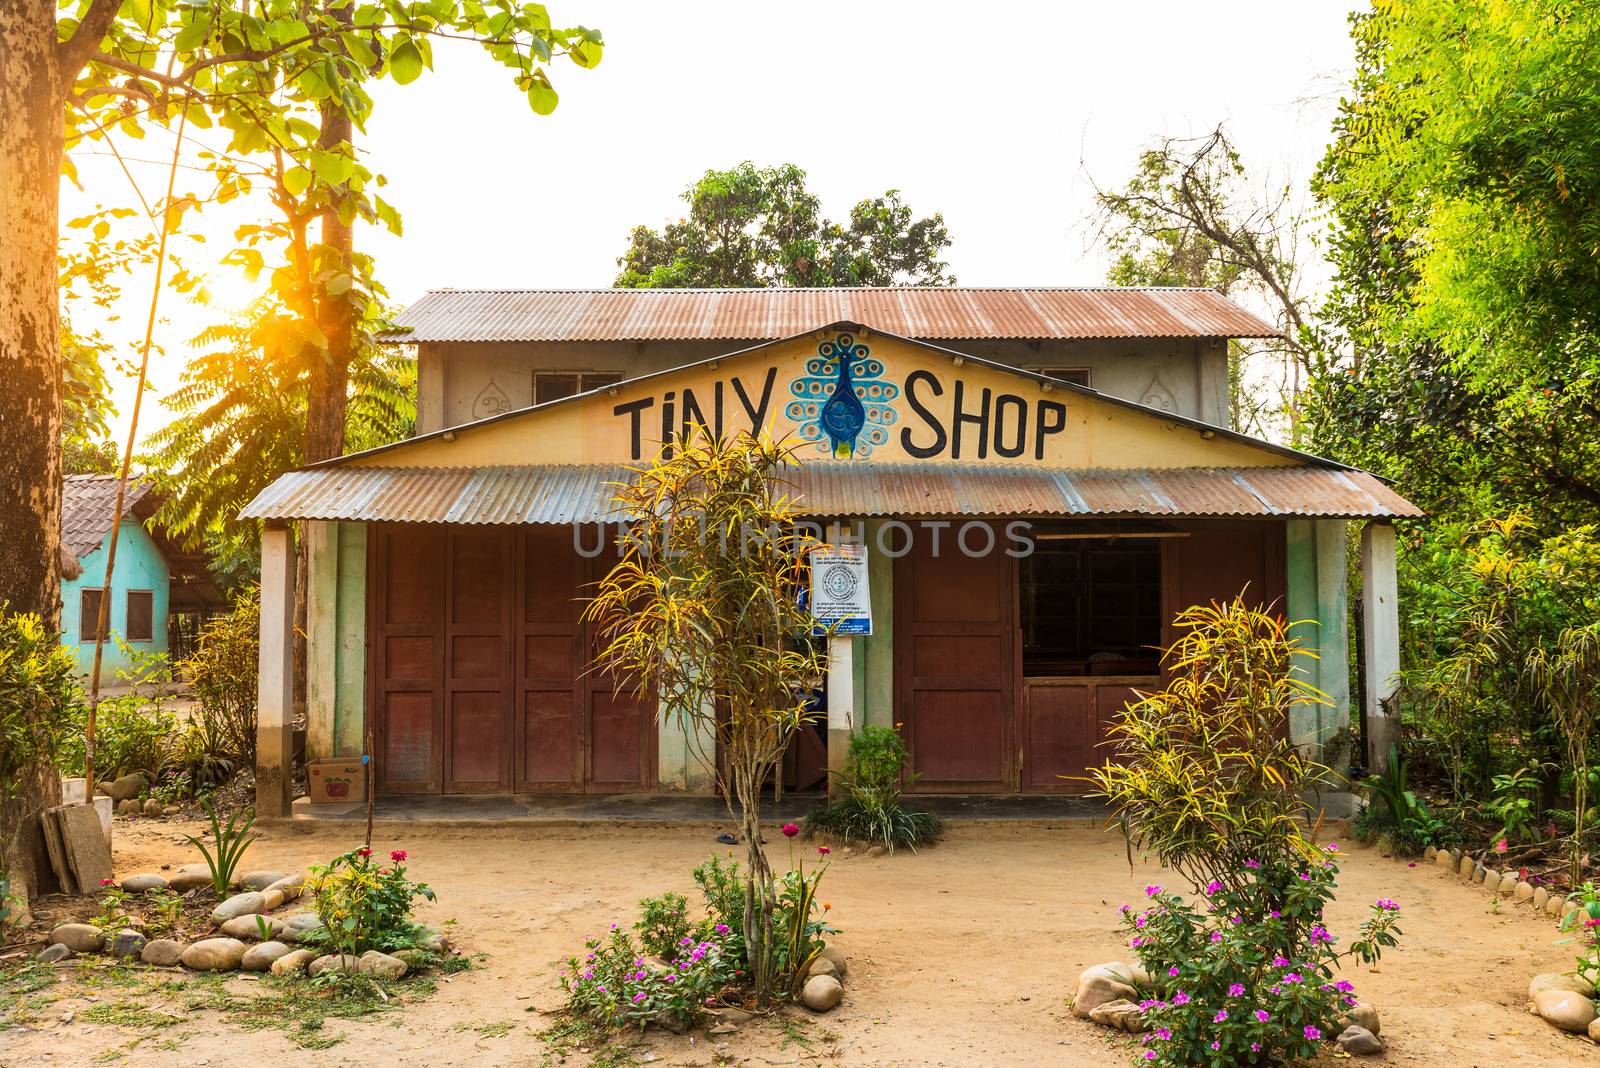 Tiny Shop in Kawasoti, Chitwan, Nepal by dutourdumonde